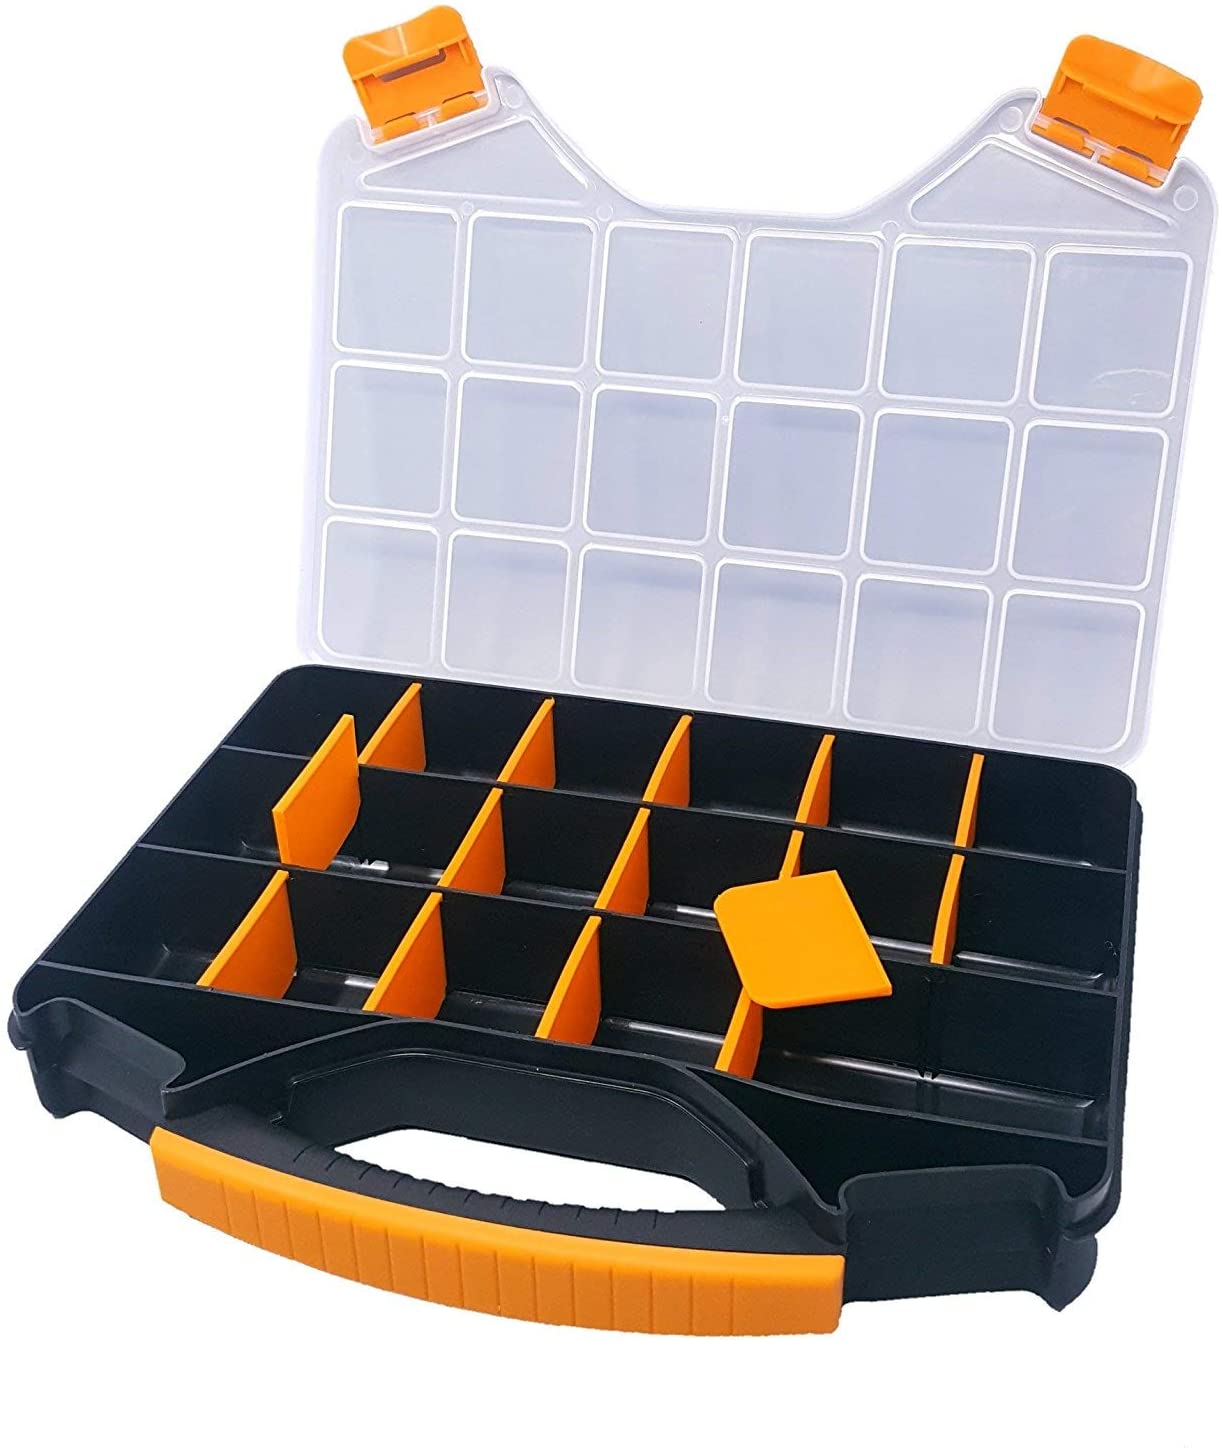 Massca Transparent Portable Storage Organizer Box